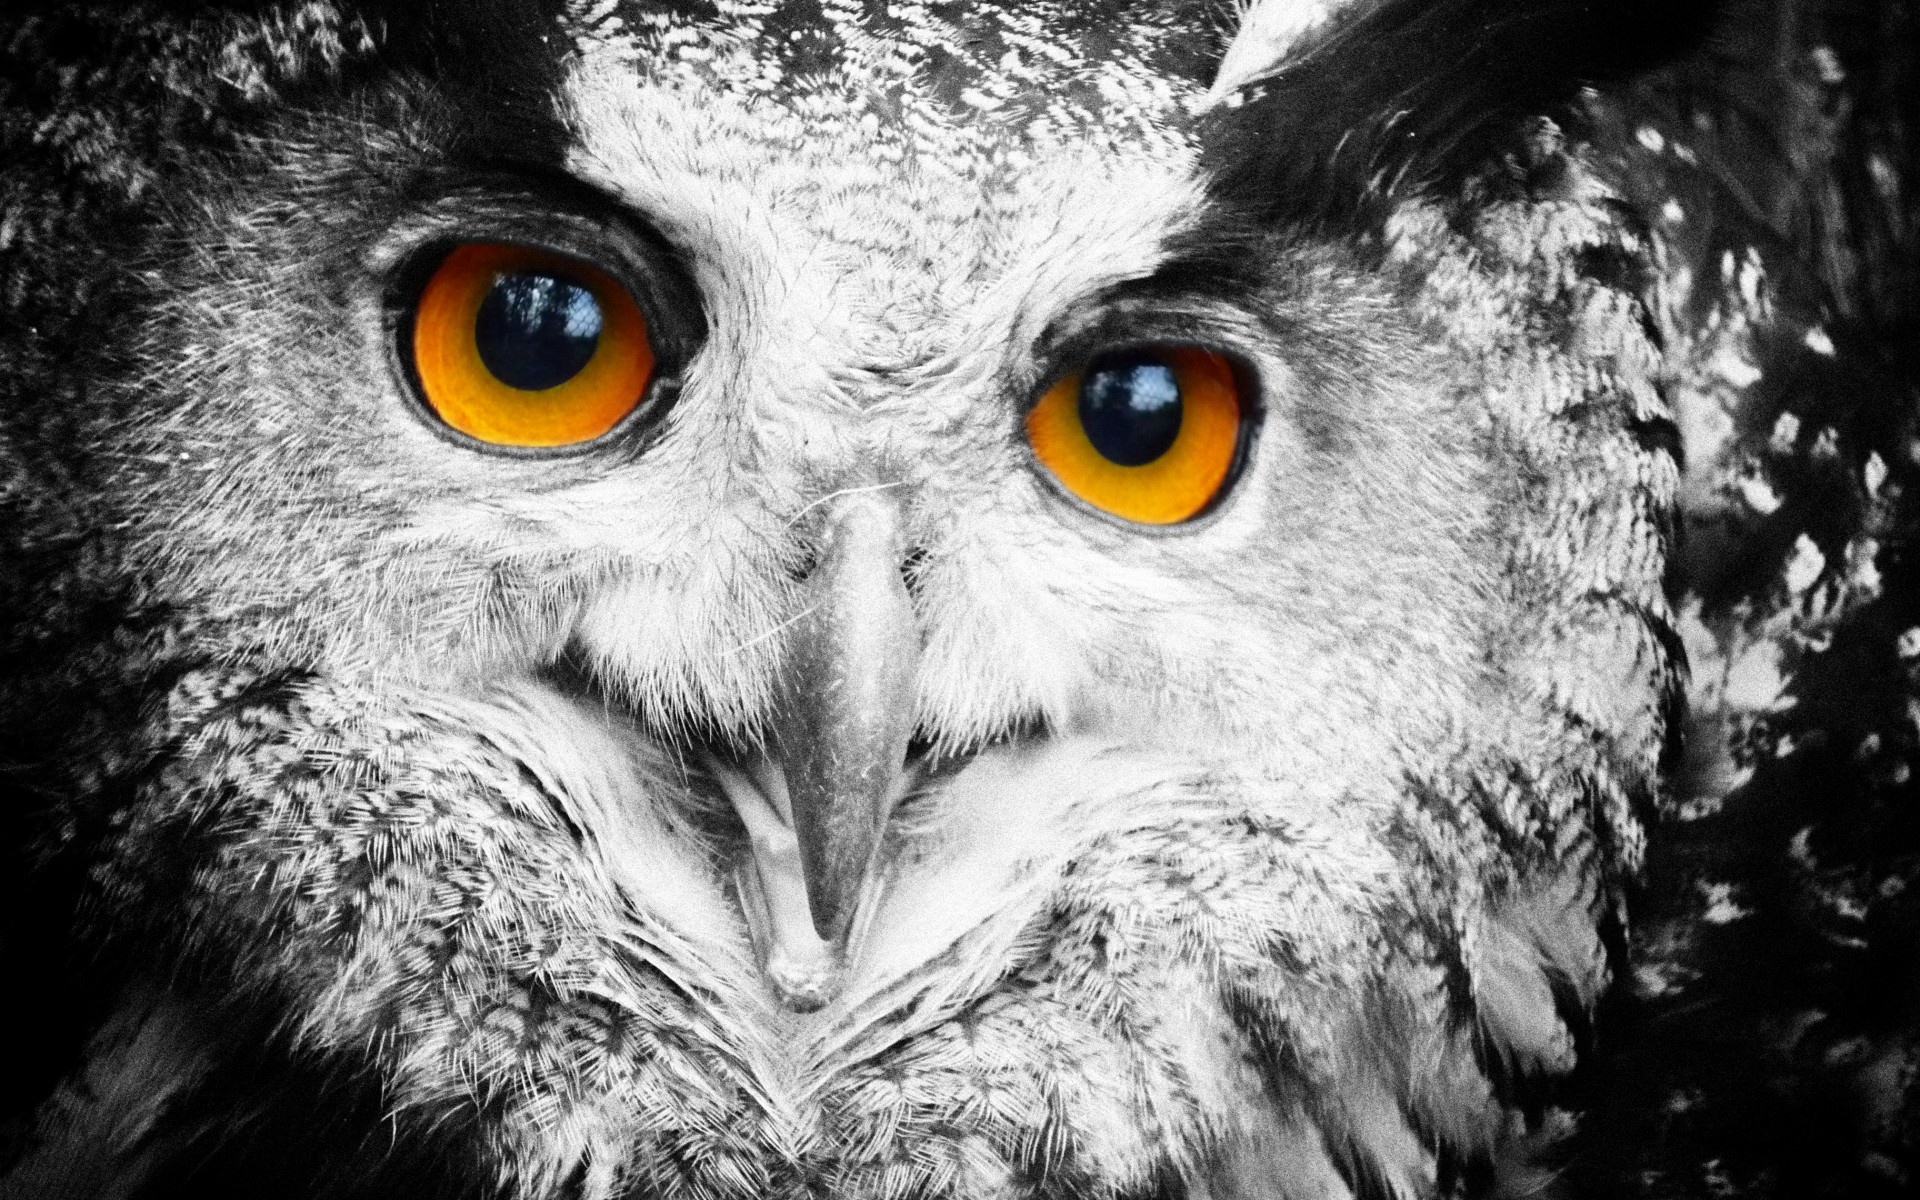 Cool Owl Wallpaper Image